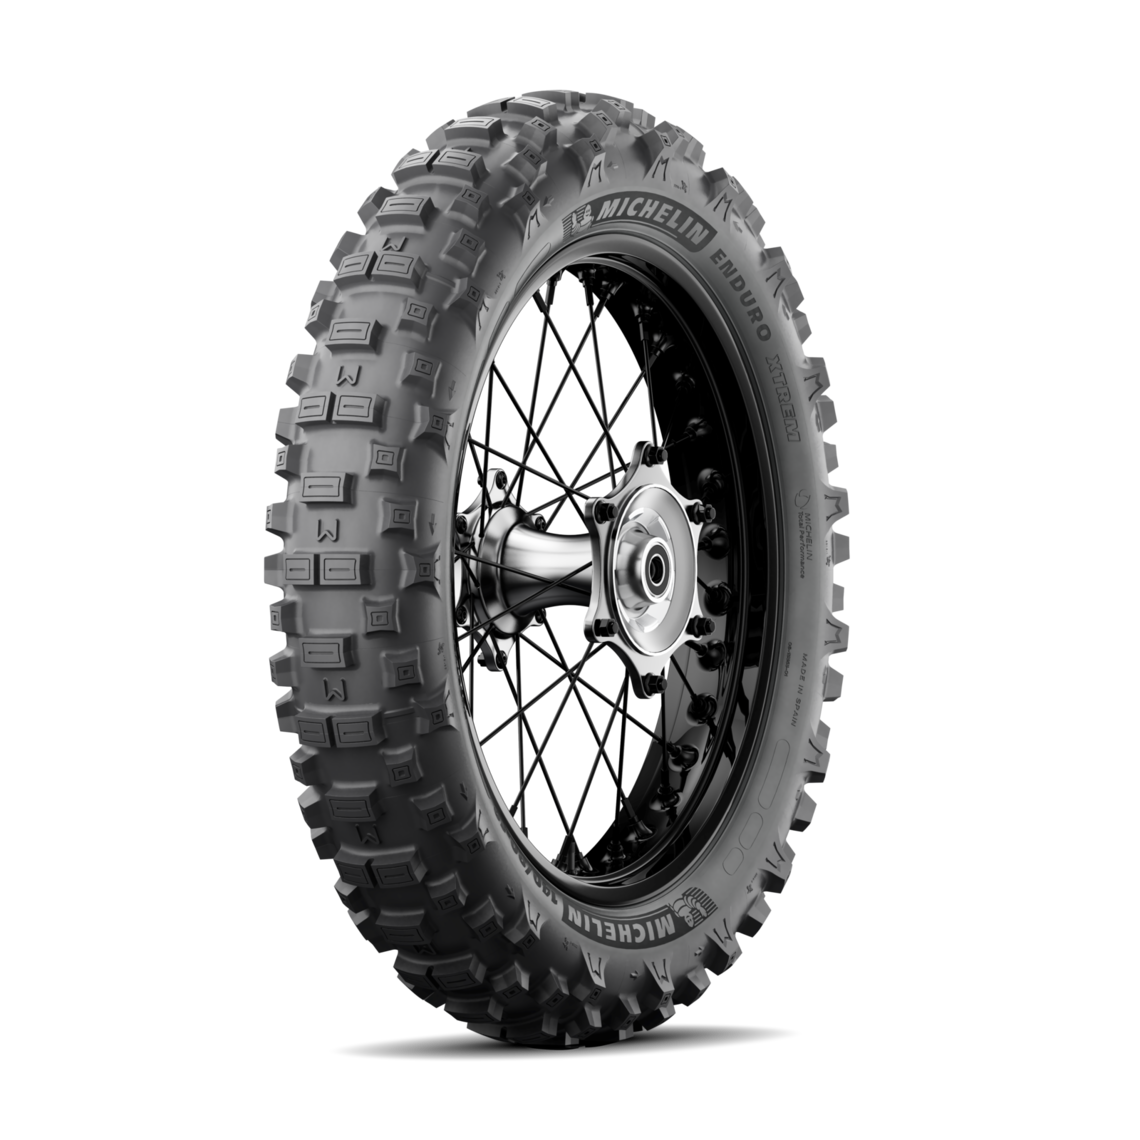 Apico Michelin Type Motocross MX Enduro Motor Bike Tyre Lever 15"/ 380mm